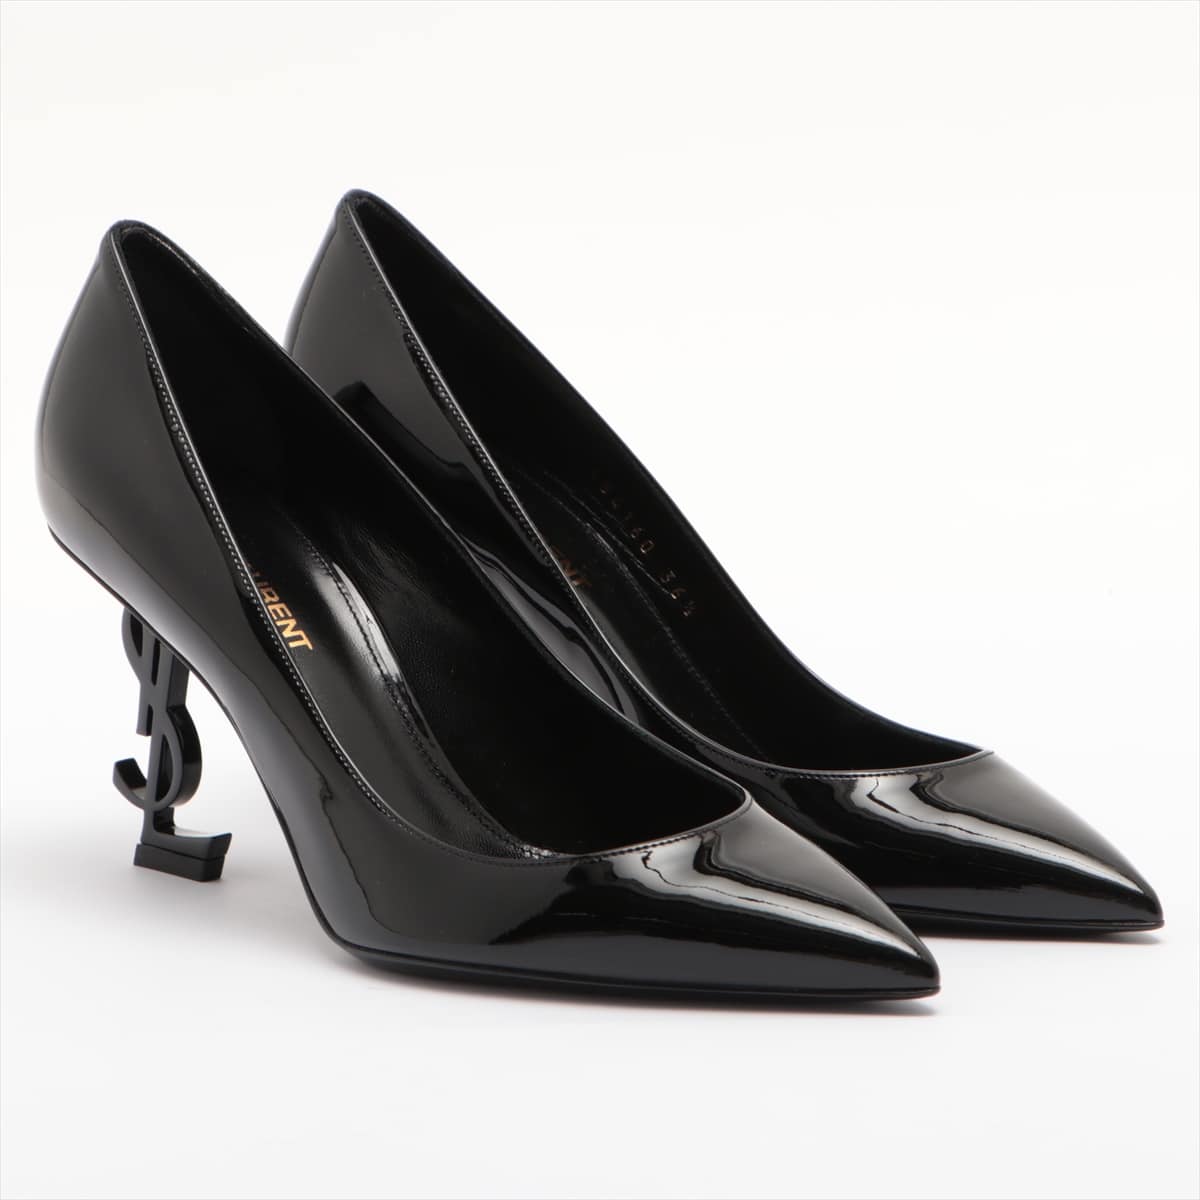 Saint Laurent Paris Opium 19SS Patent leather Pumps 36.5 Ladies' Black YSL heel 484160